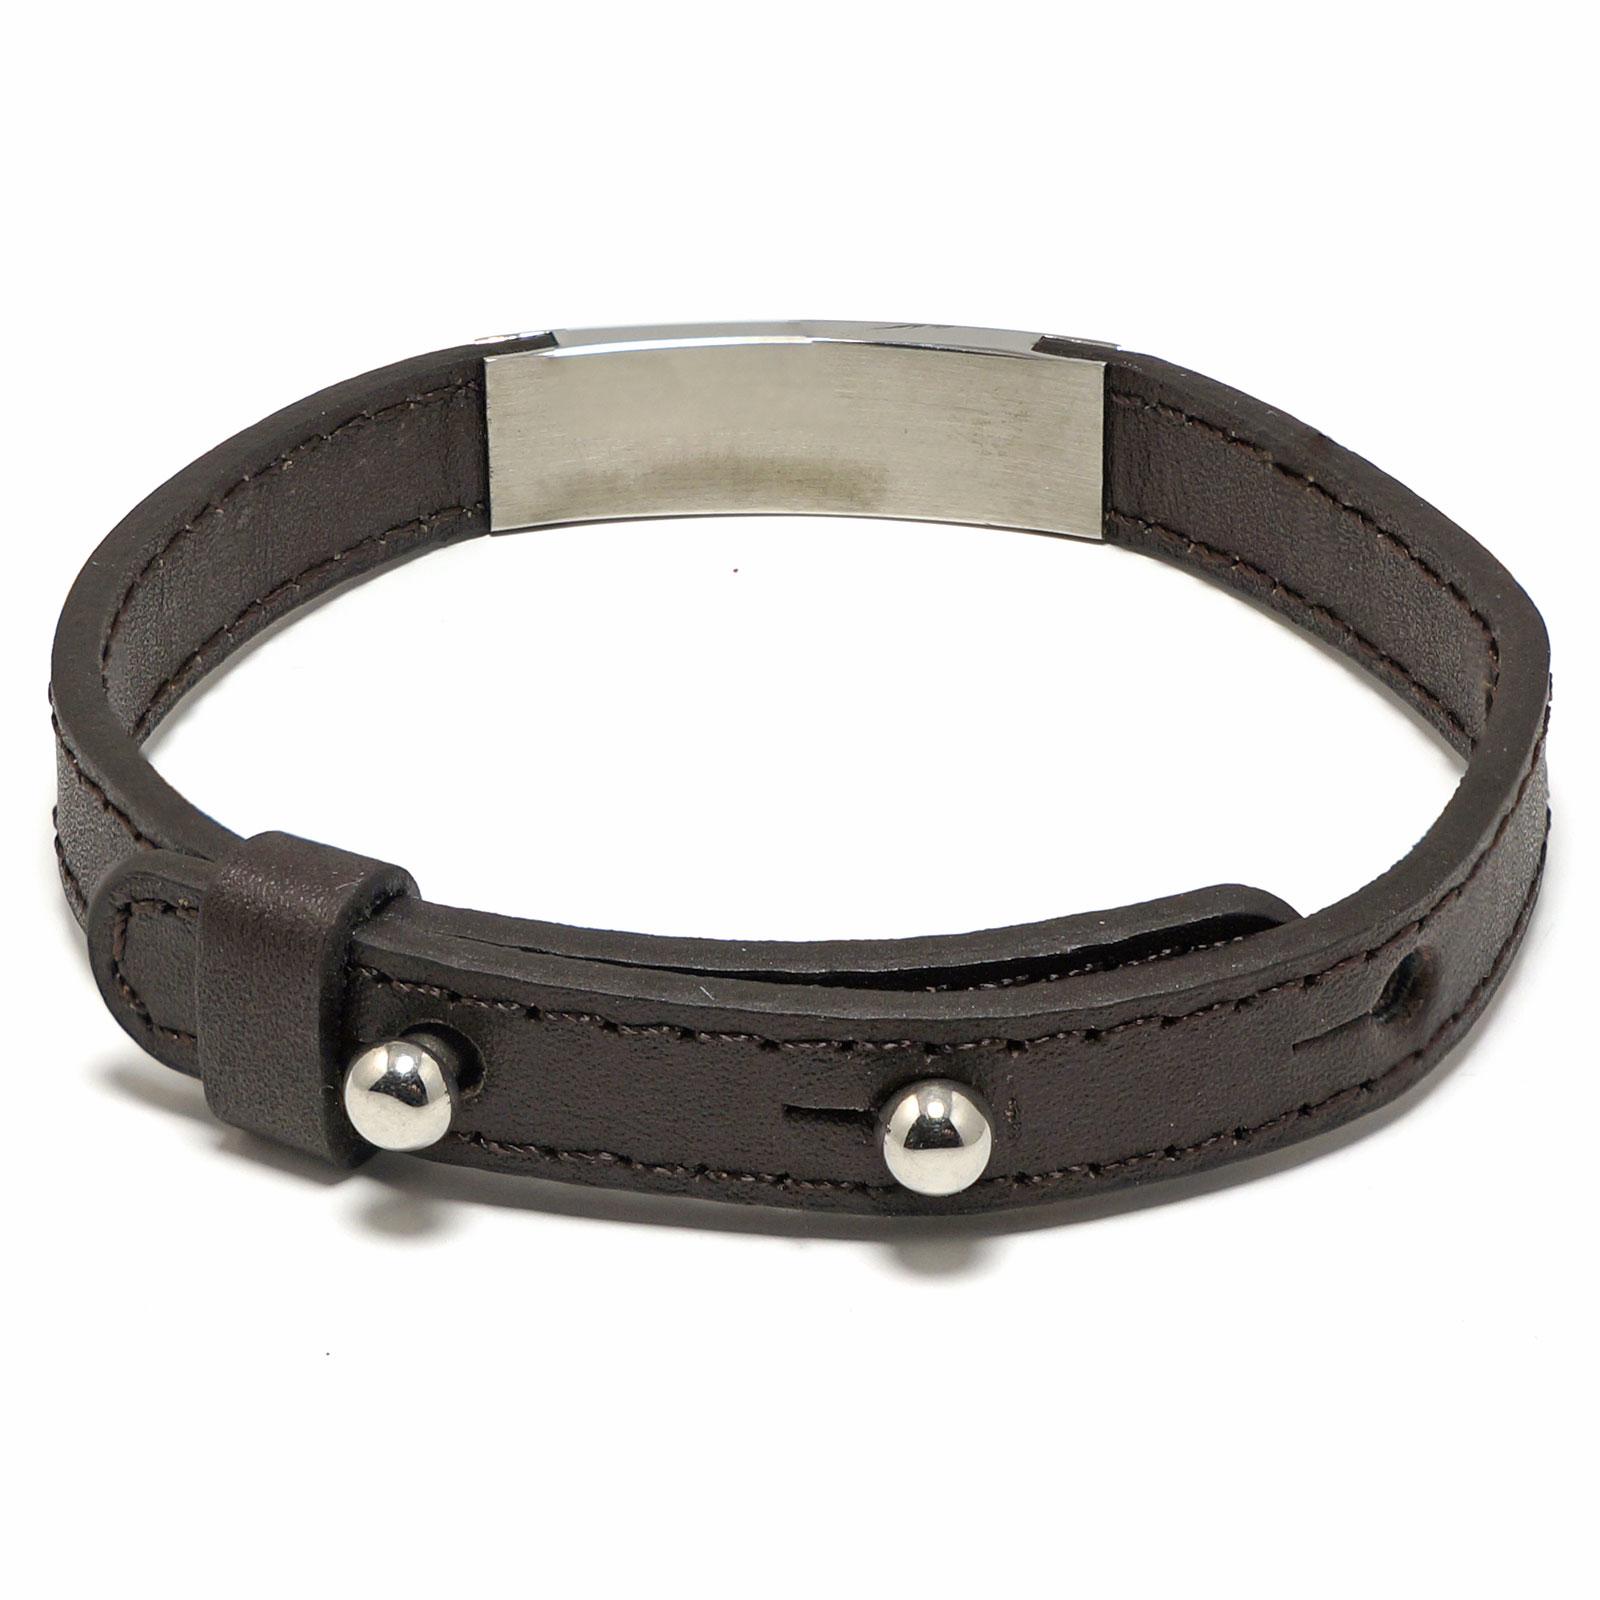 Personalised Adjustable Medical Alert Leather Bracelet - Any Engraving.